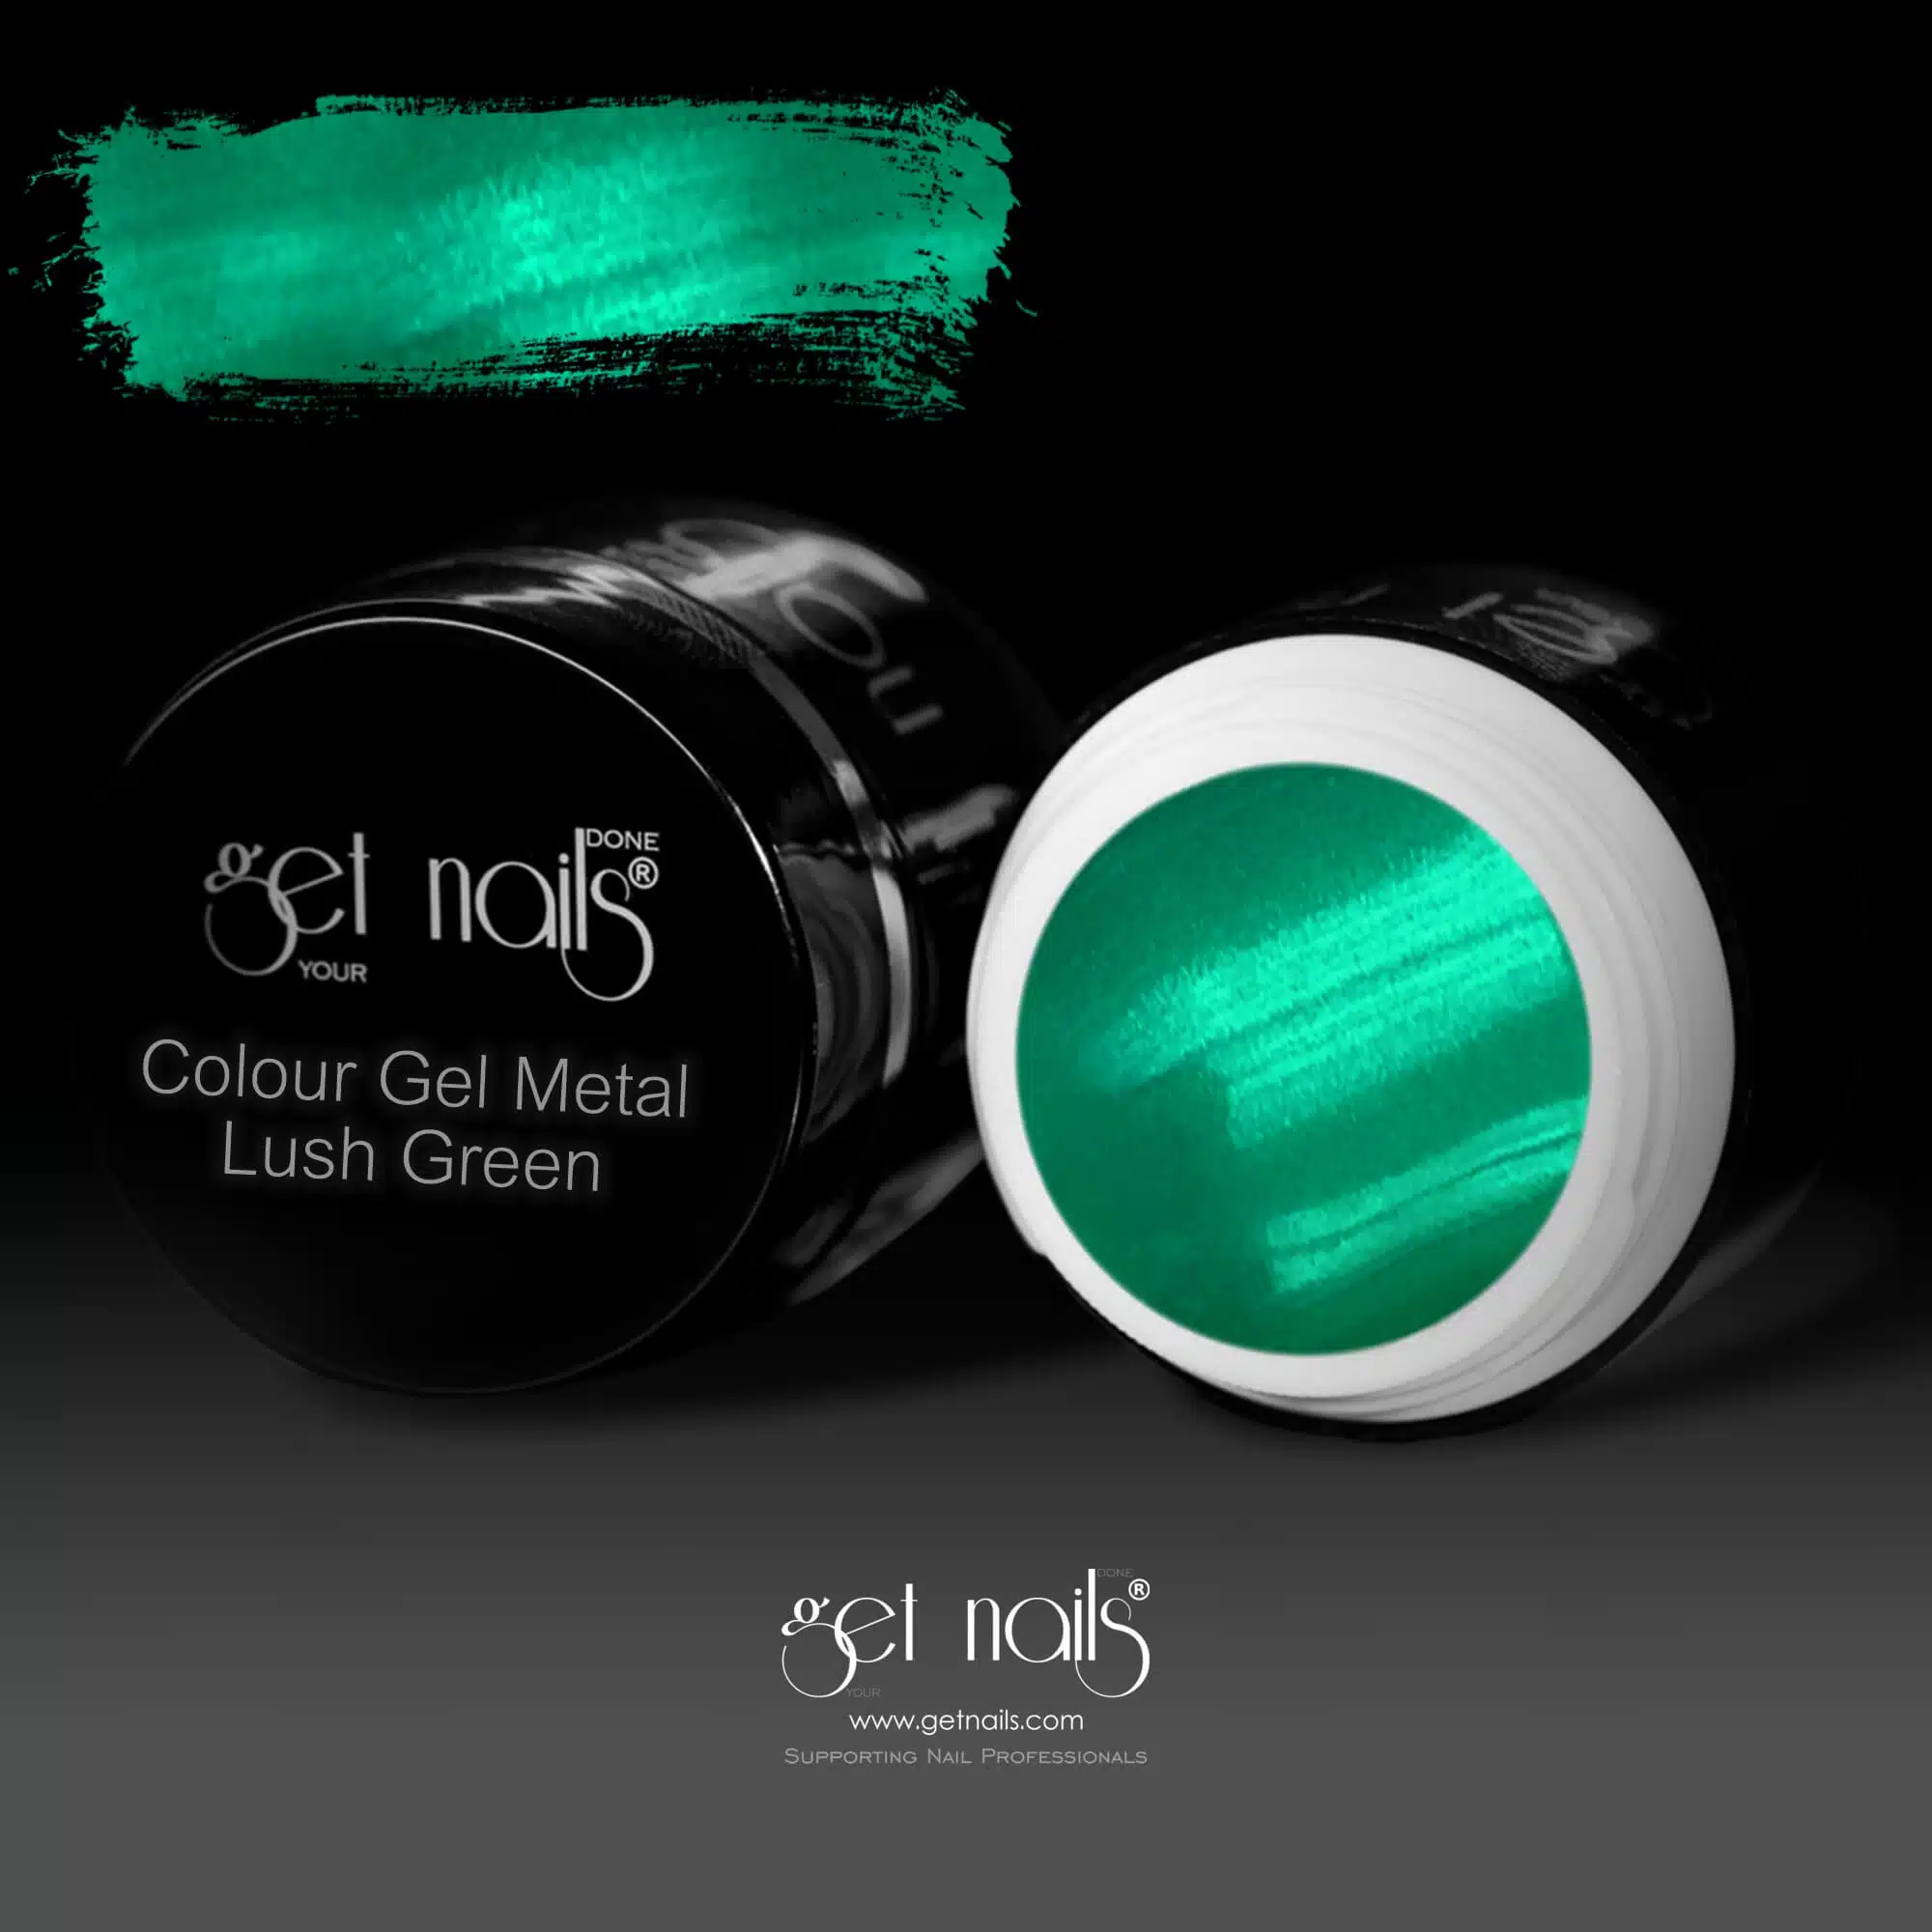 Get Nails Austria - Цветной гель Metal Lush Green 5g